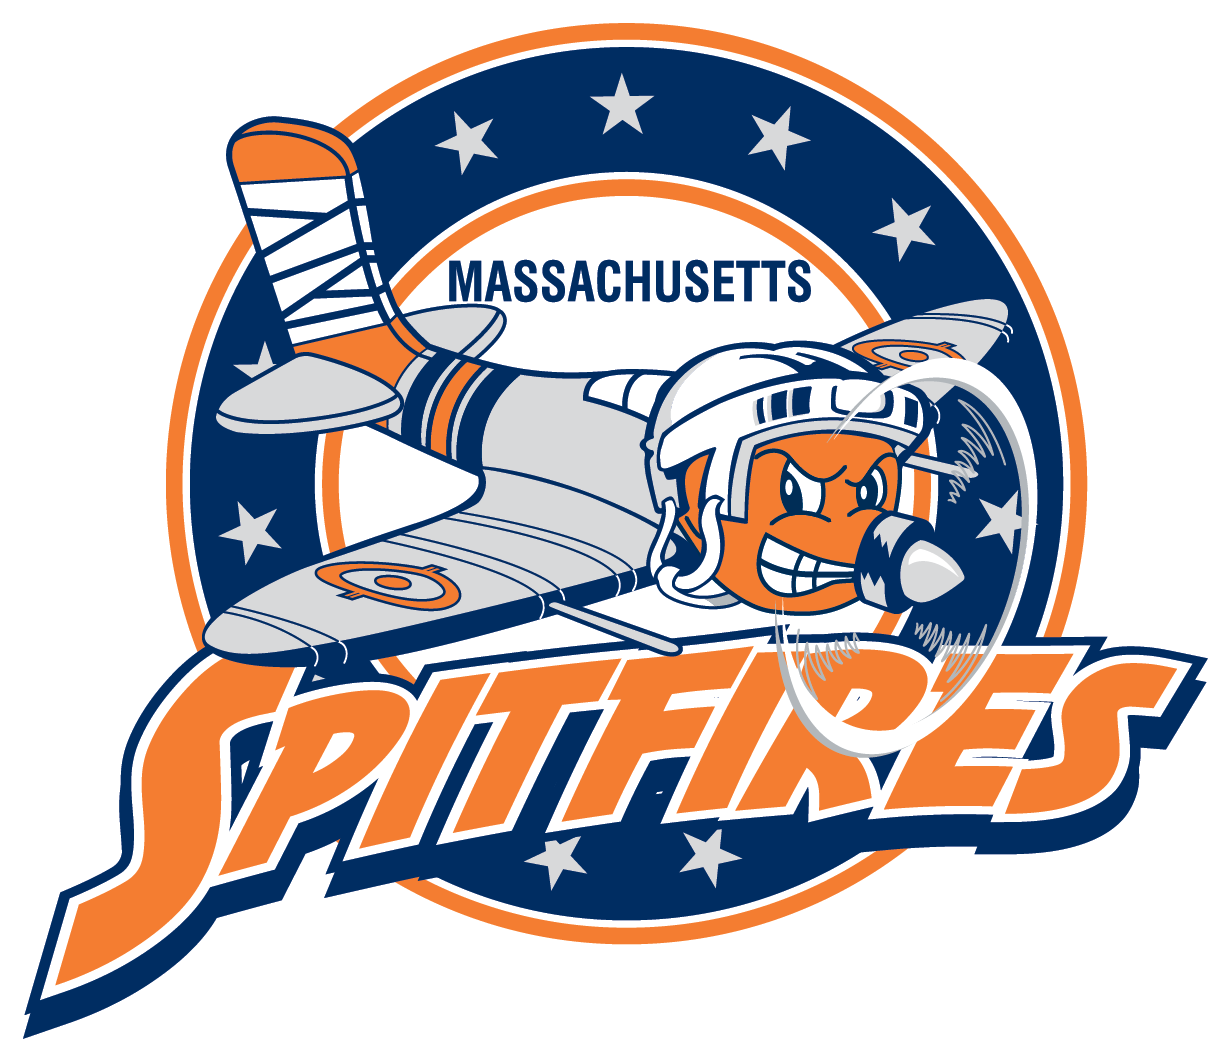 Program Description - Massachusetts Spitfires (1231x1062)